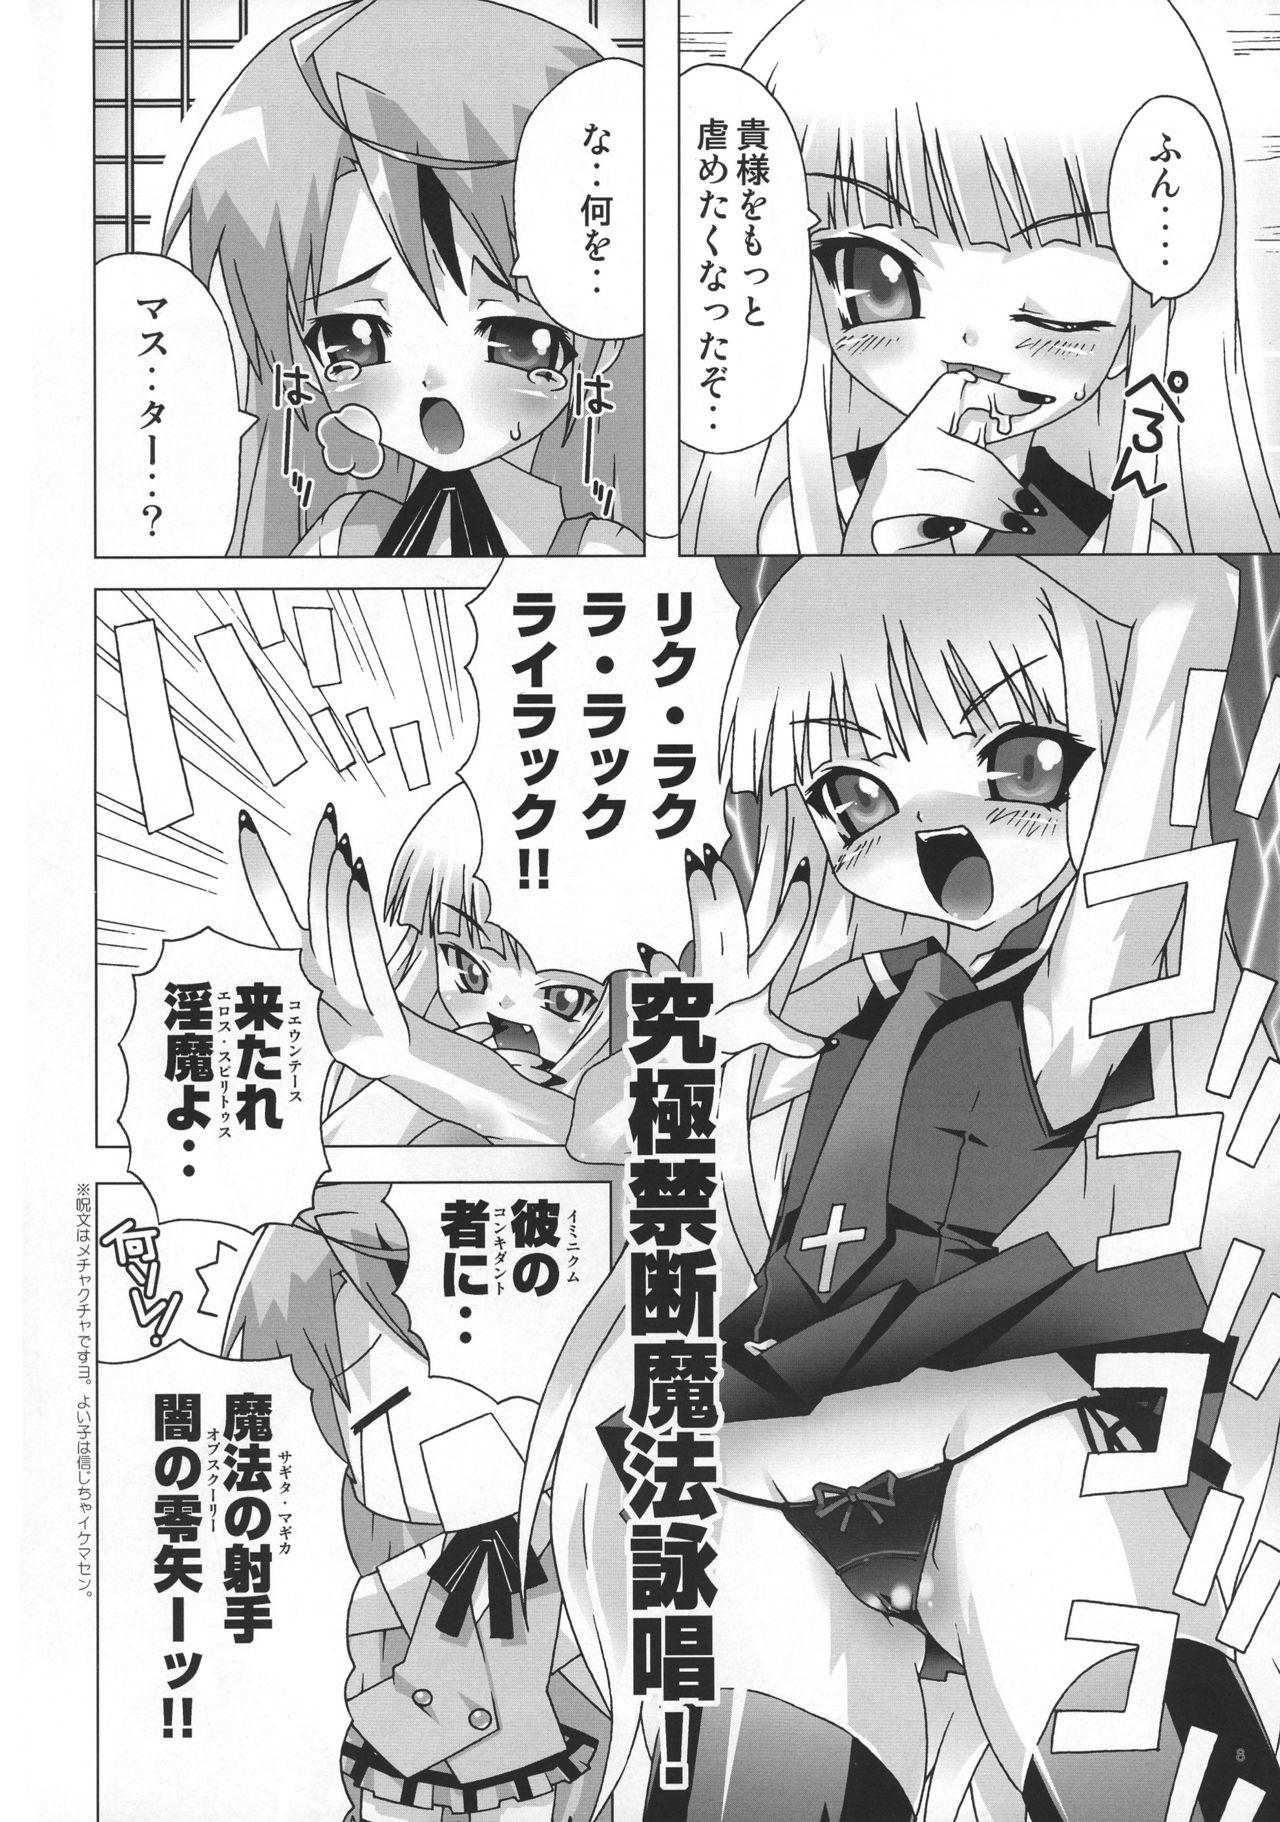 Cavala Mahou Sensei Negima! Mainax 2 - Mahou sensei negima  - Page 7